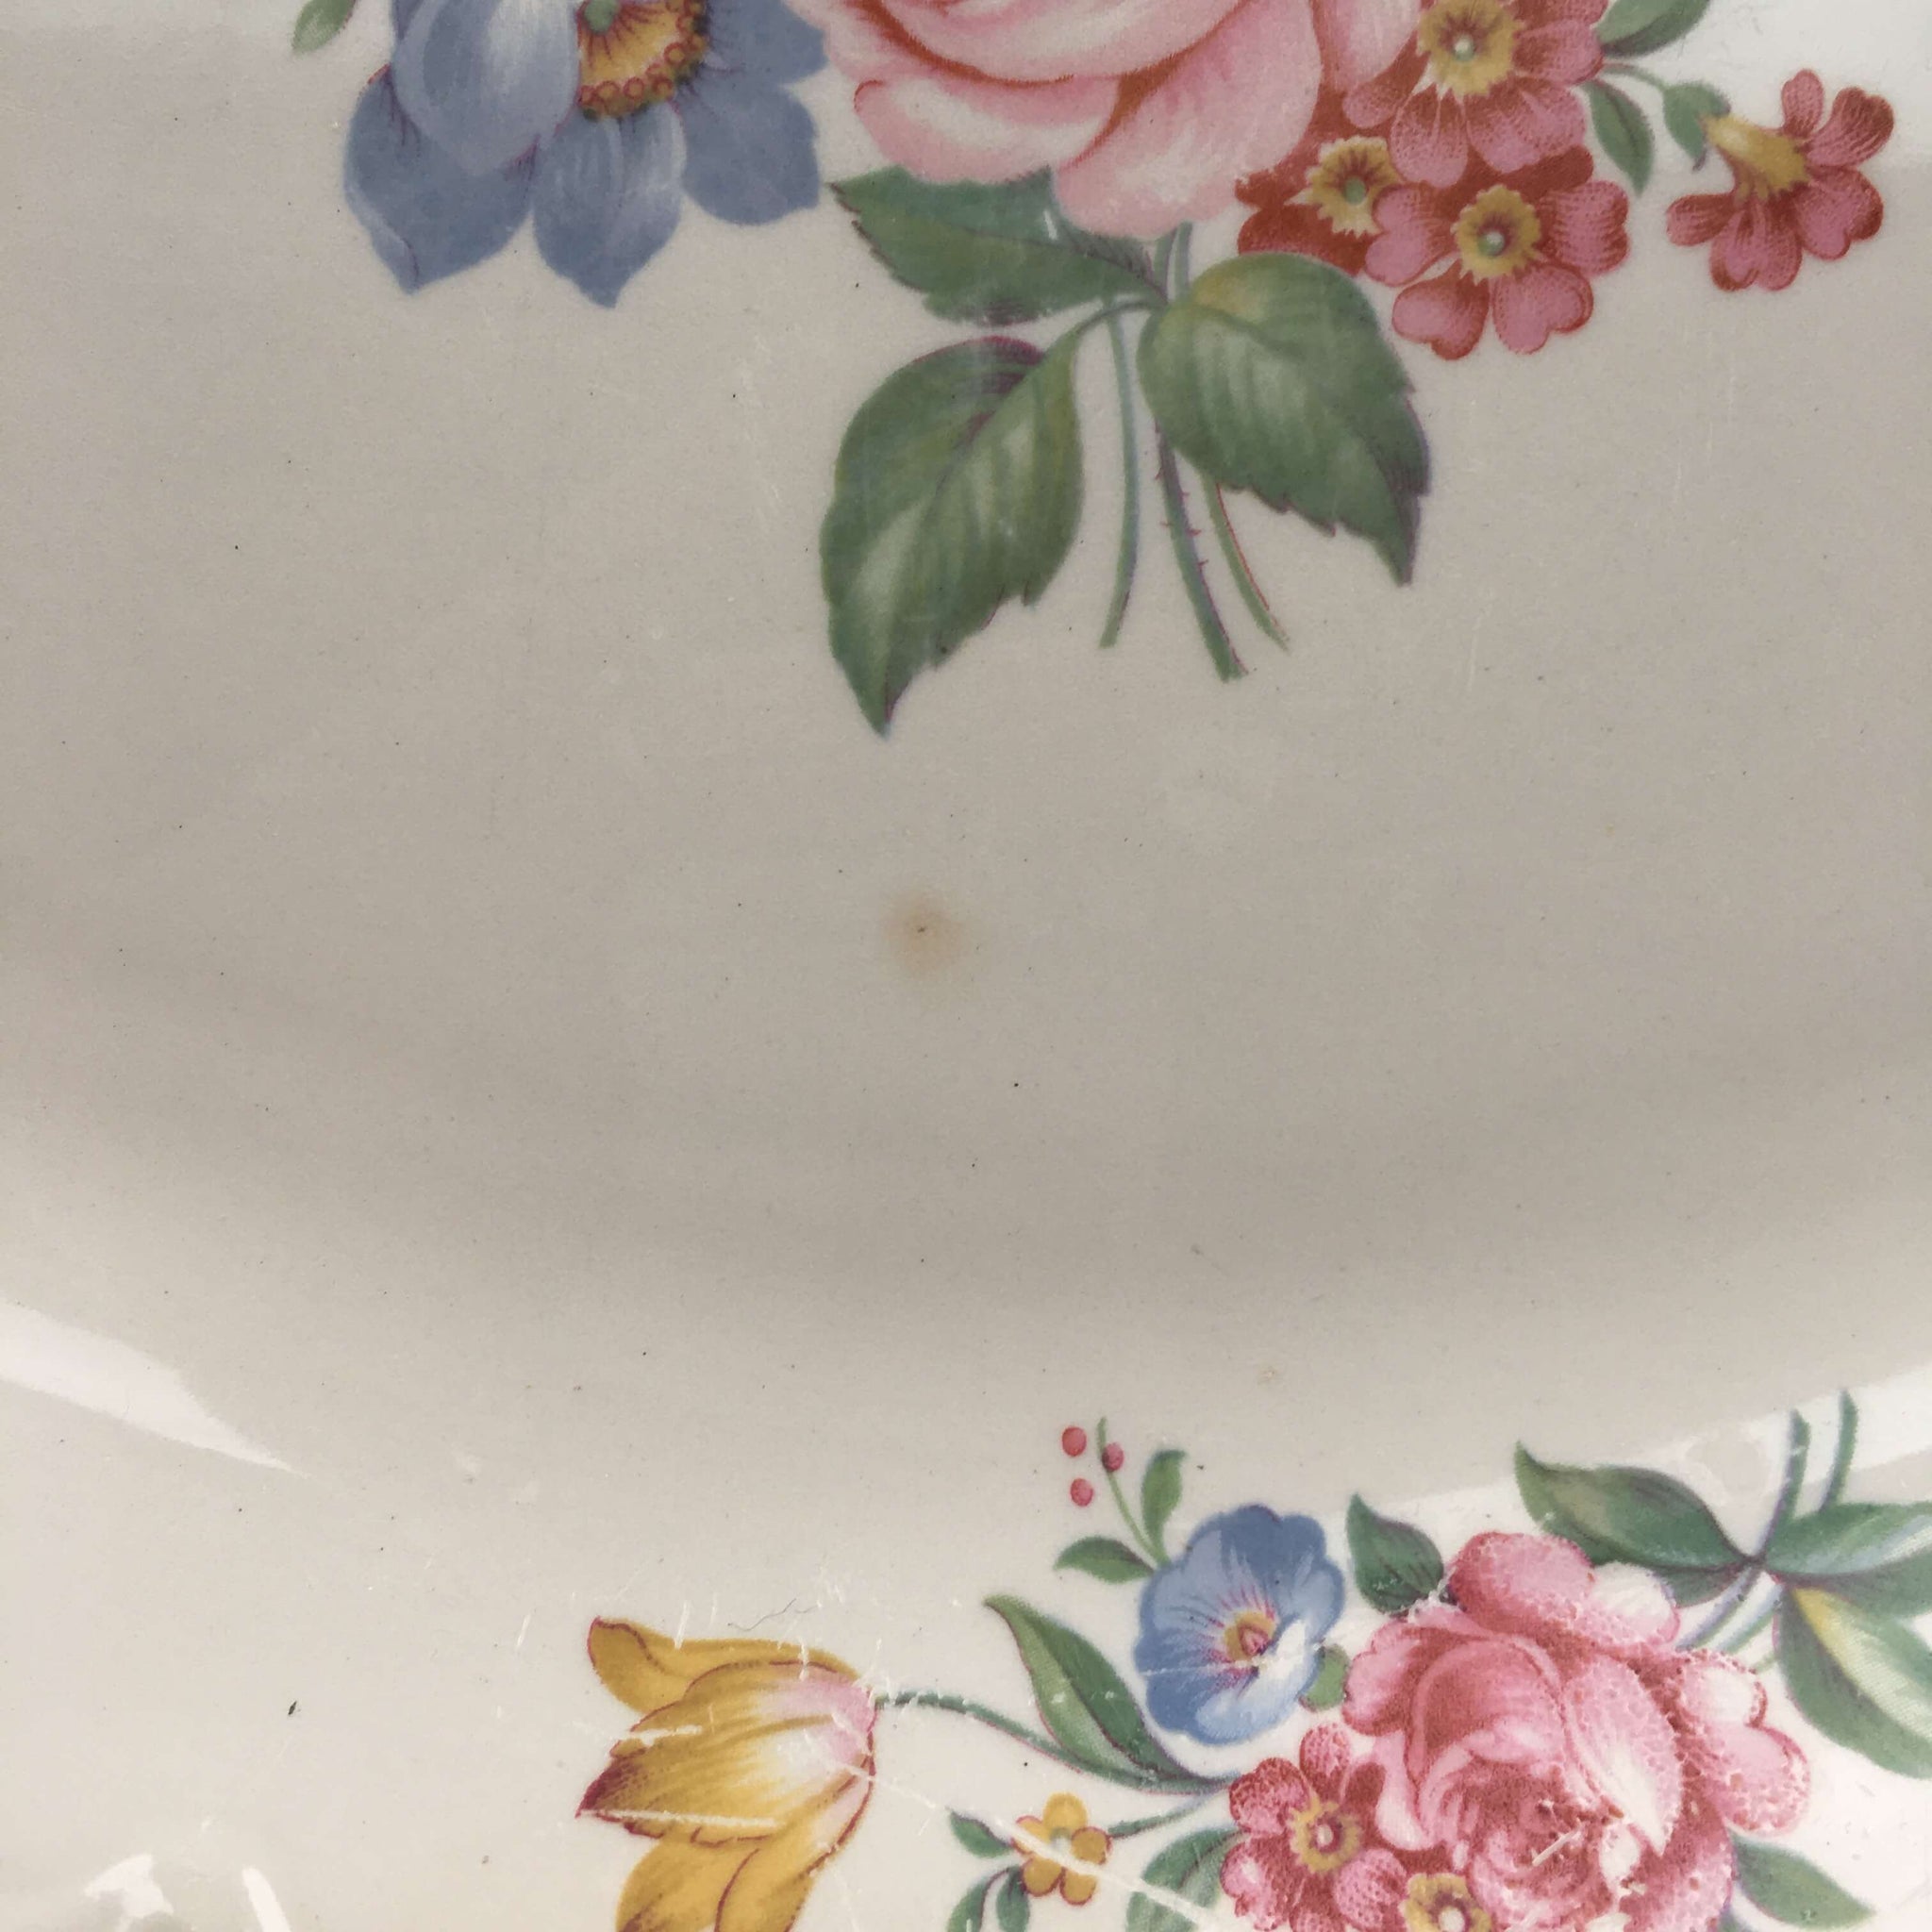 Rare Vintage 1940s Floral Platter - Scio Ohio Pottery Co - Hazel Pattern